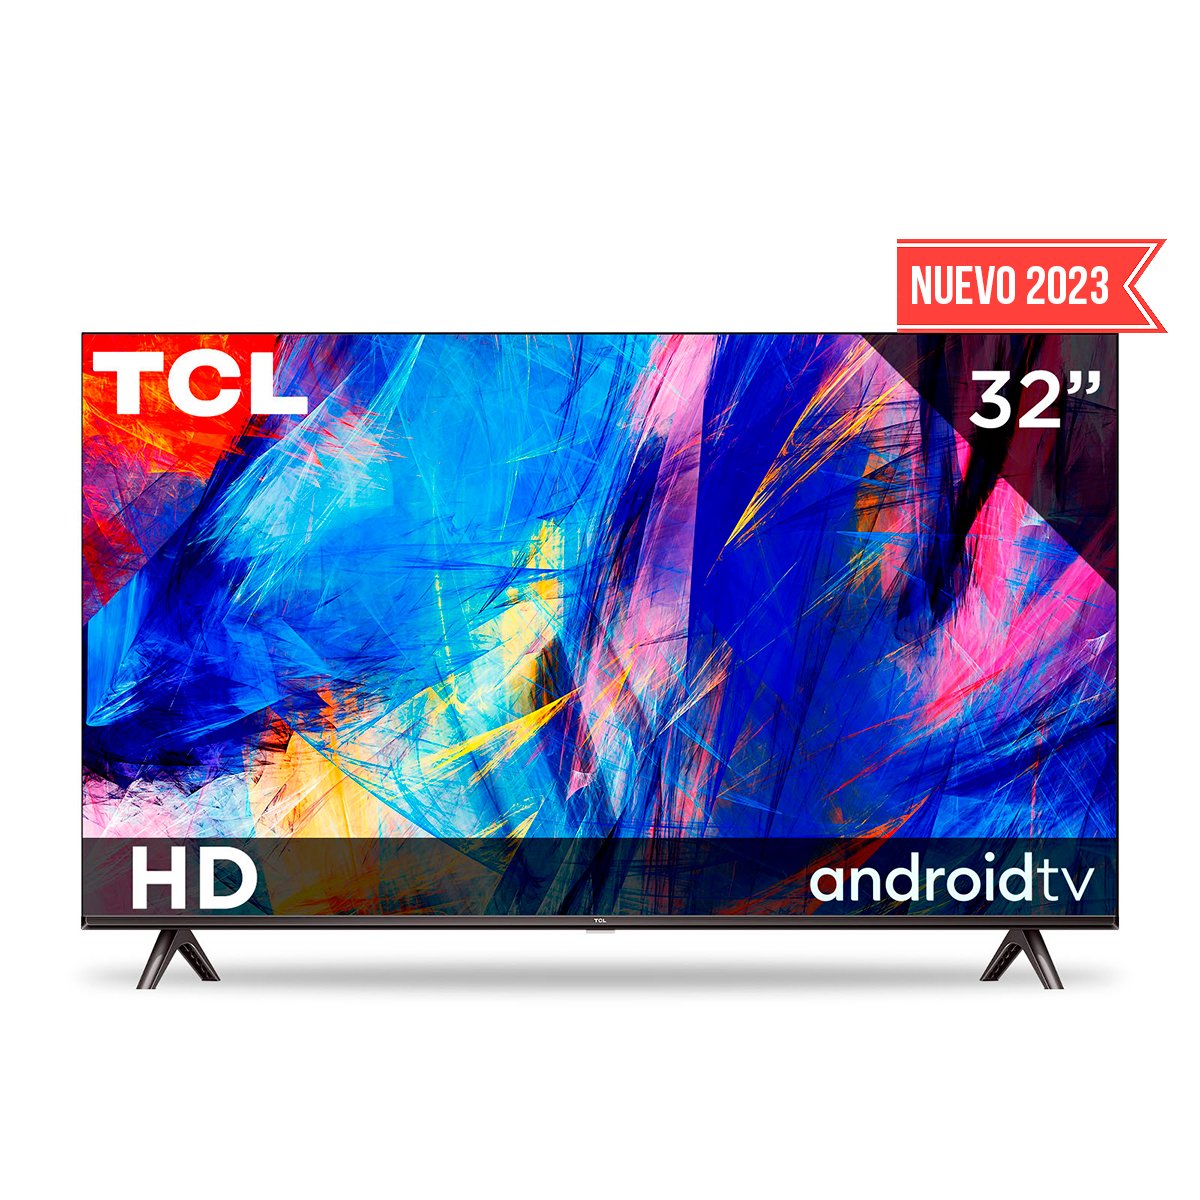 Pantalla Smart TV Hisense LED de 32 pulgadas HD 32H5G con Android TV